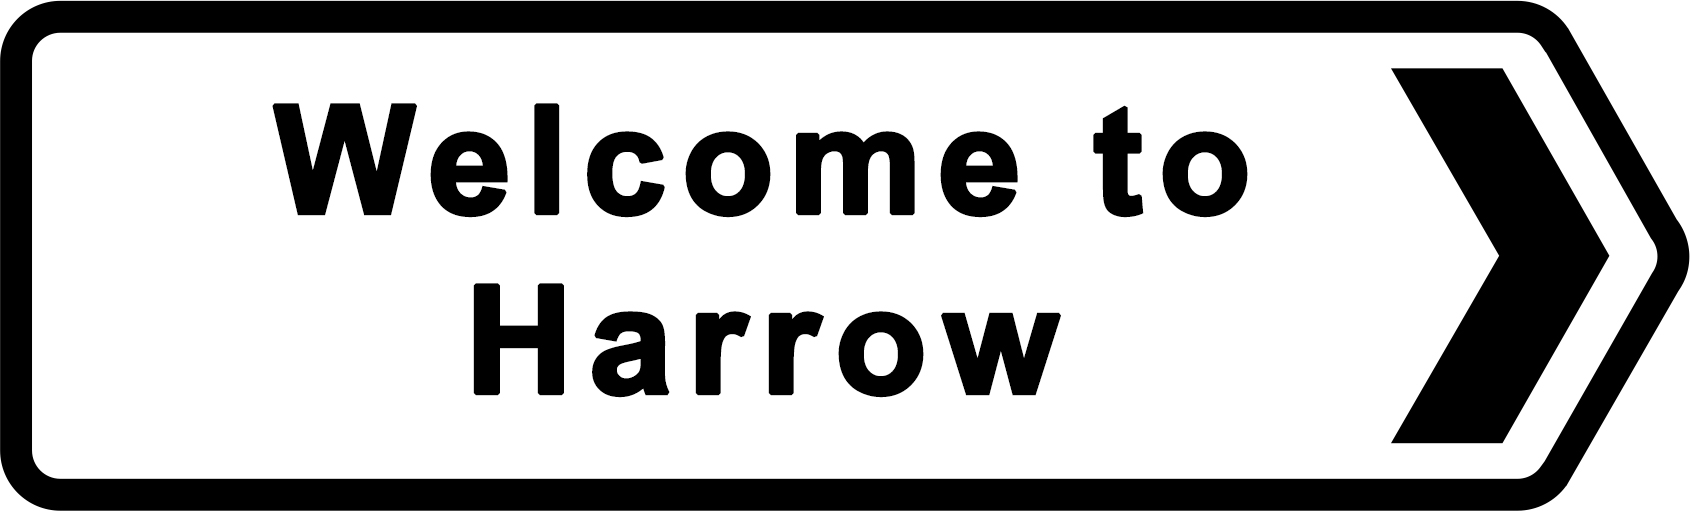 Harrow County School - Cheap Driving Schools Lessons in Harrow, HA1/HA2/HA3, London borough of Harrow, Greater London